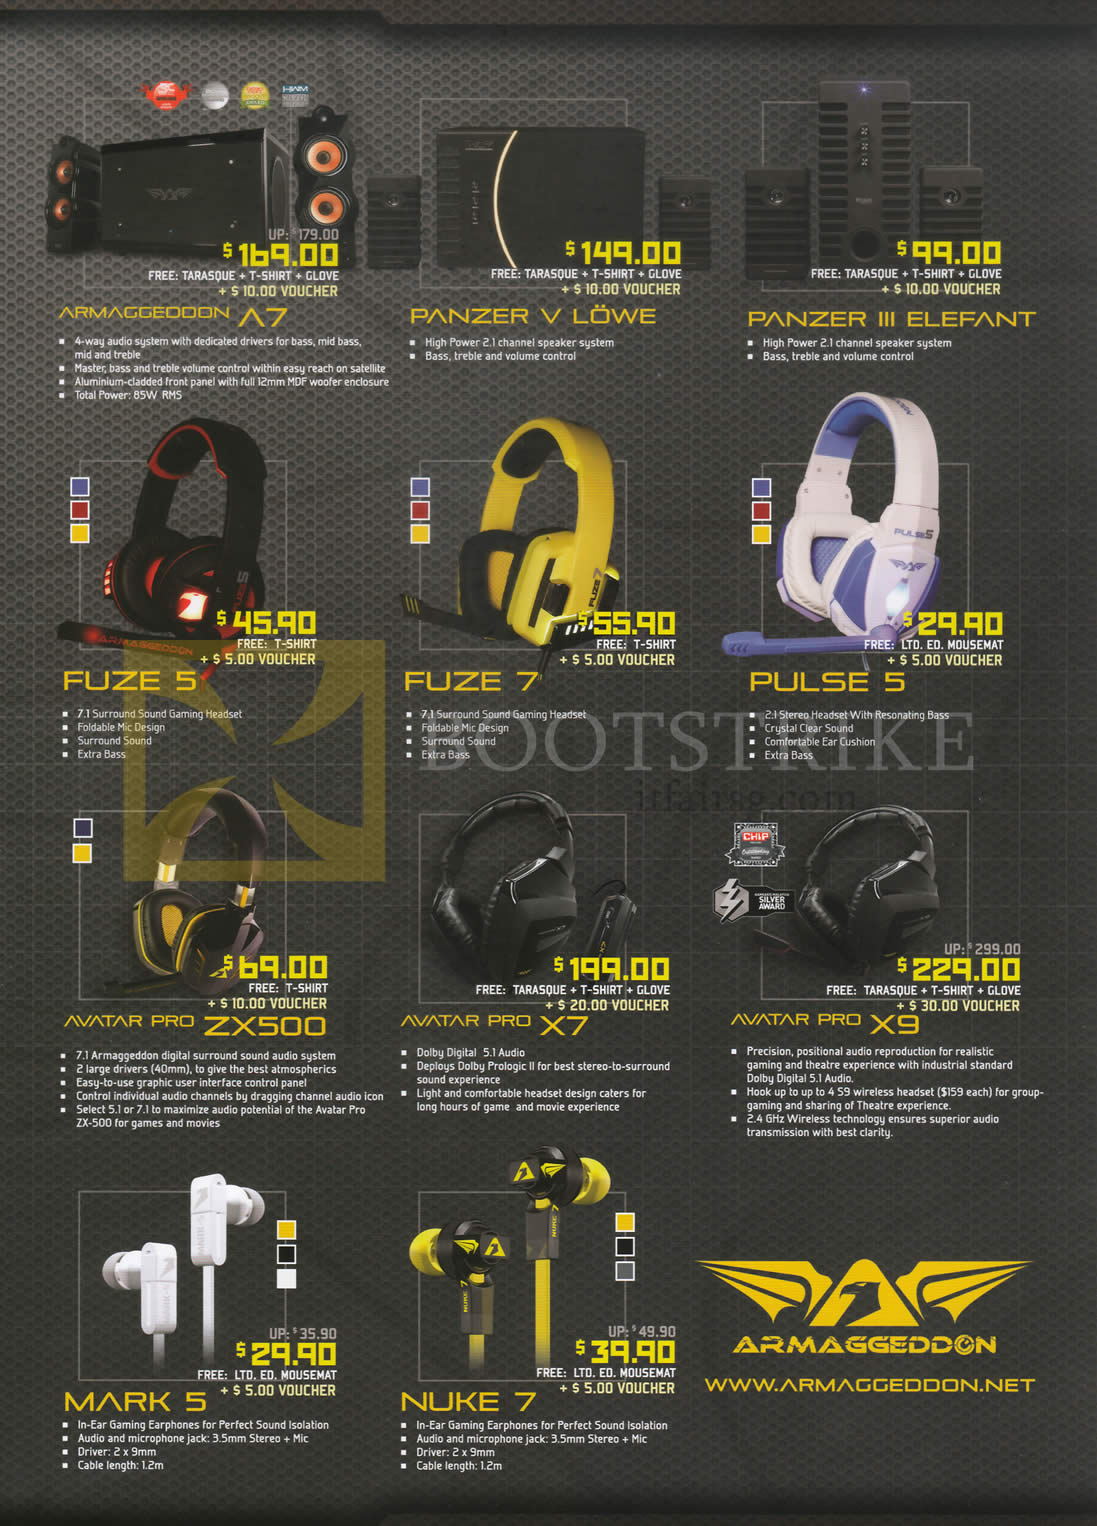 COMEX 2014 price list image brochure of Armageddon Headphones, Speaker Systems, A7, Panzer V Lowe, III Elefant, Fuze 5, Fuze 7, Pulse 5, Avatar Pro ZX500, X7, X9, Mark 5, Nuke 7